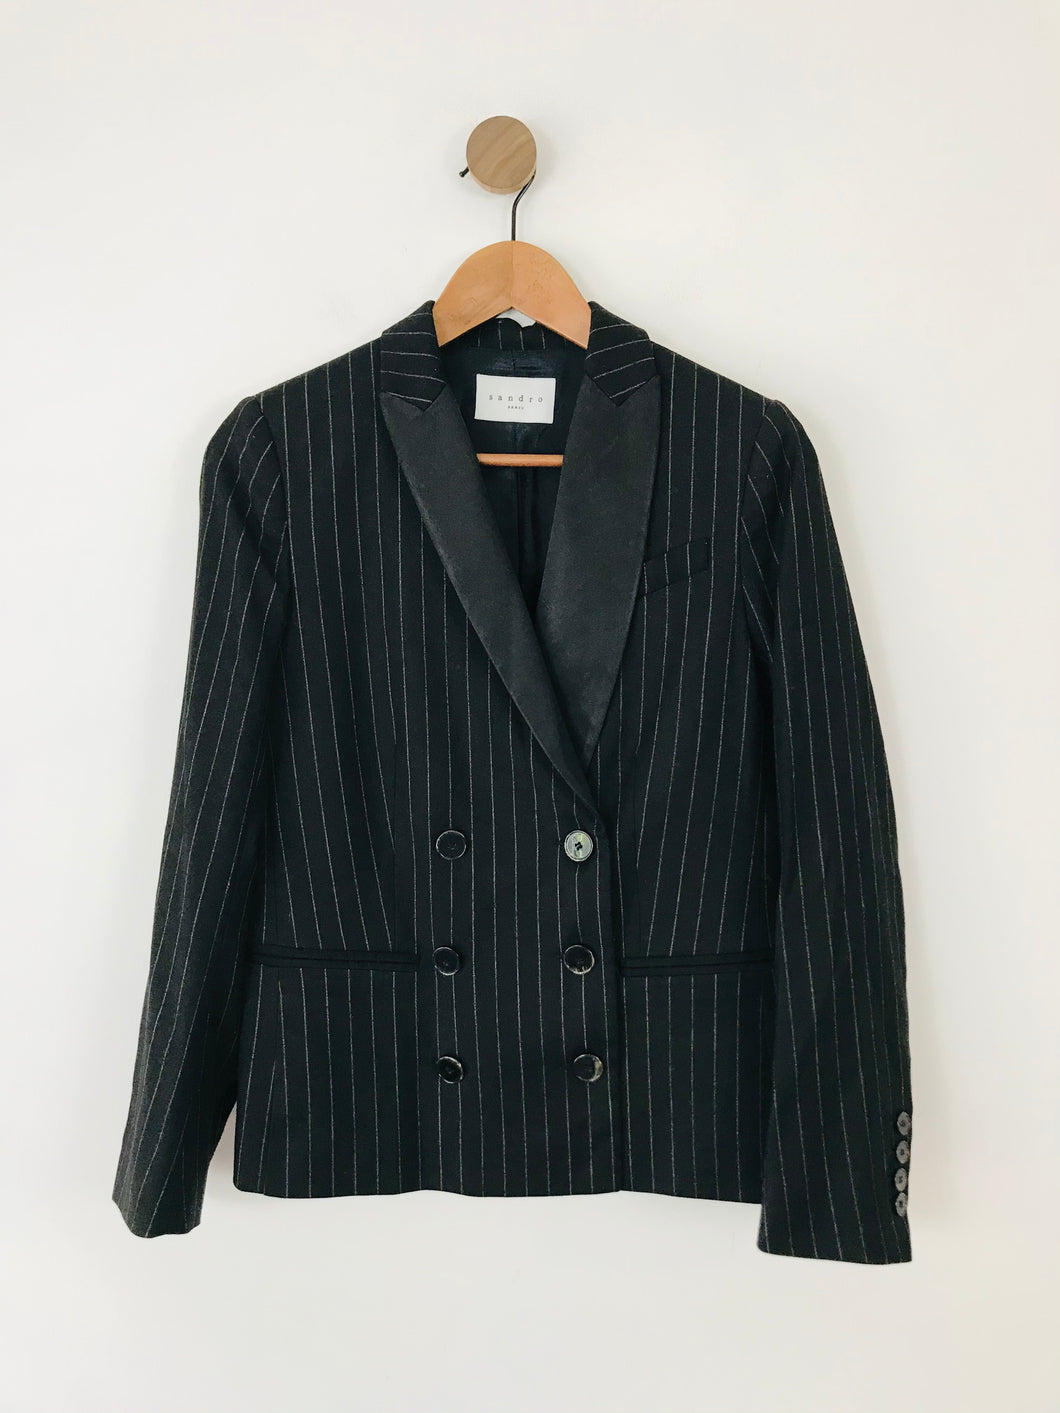 Sandro Women's Striped Double Breasted Suit Jacket Blazer Jacket | 38 UK10 | Black